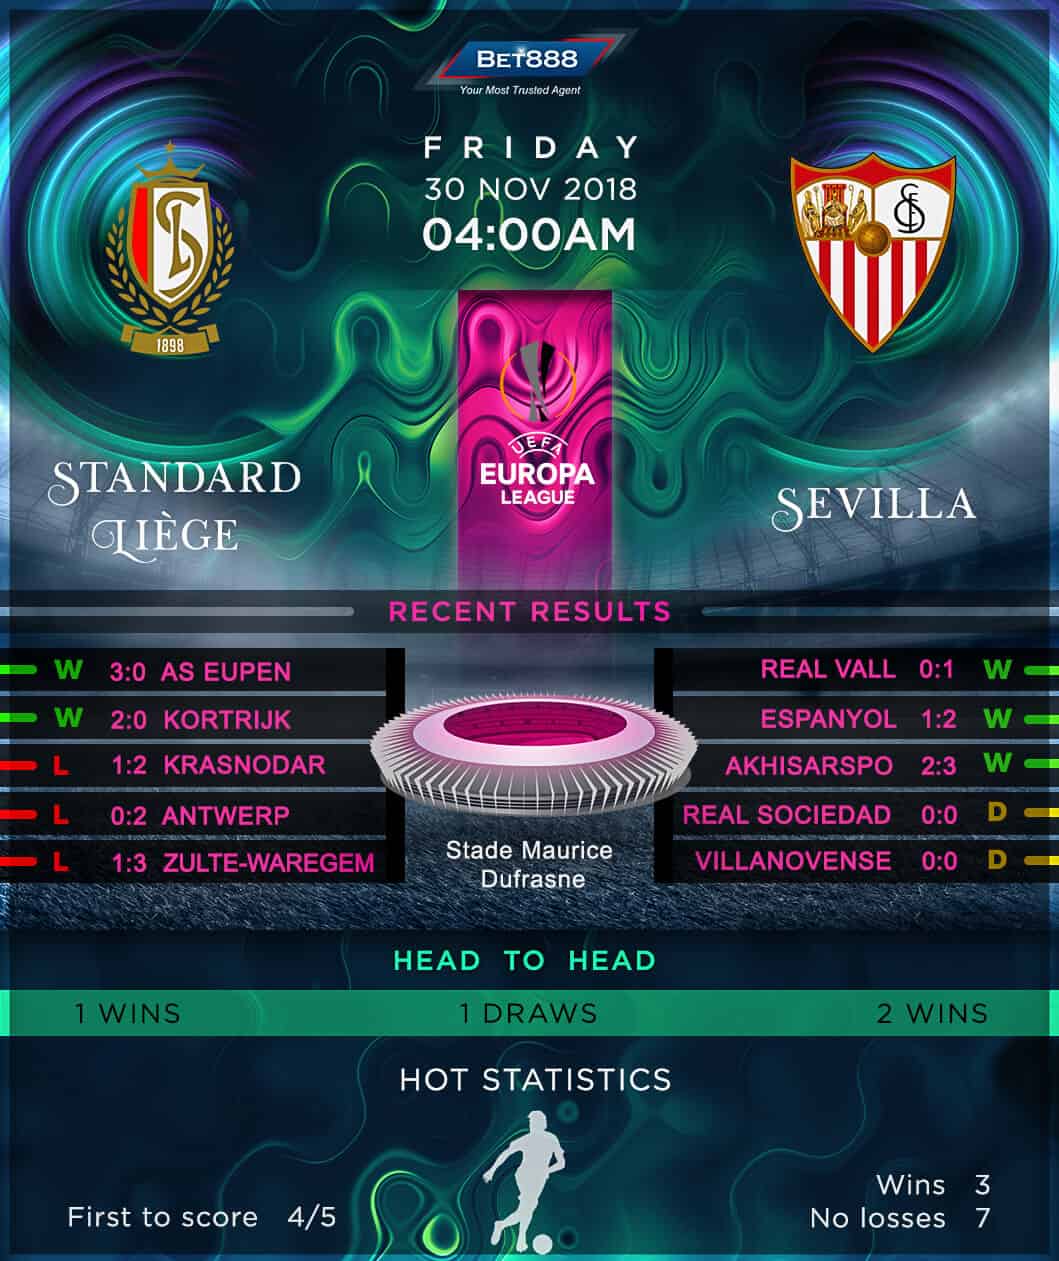 Standard Liege vs Sevilla 30/11/18